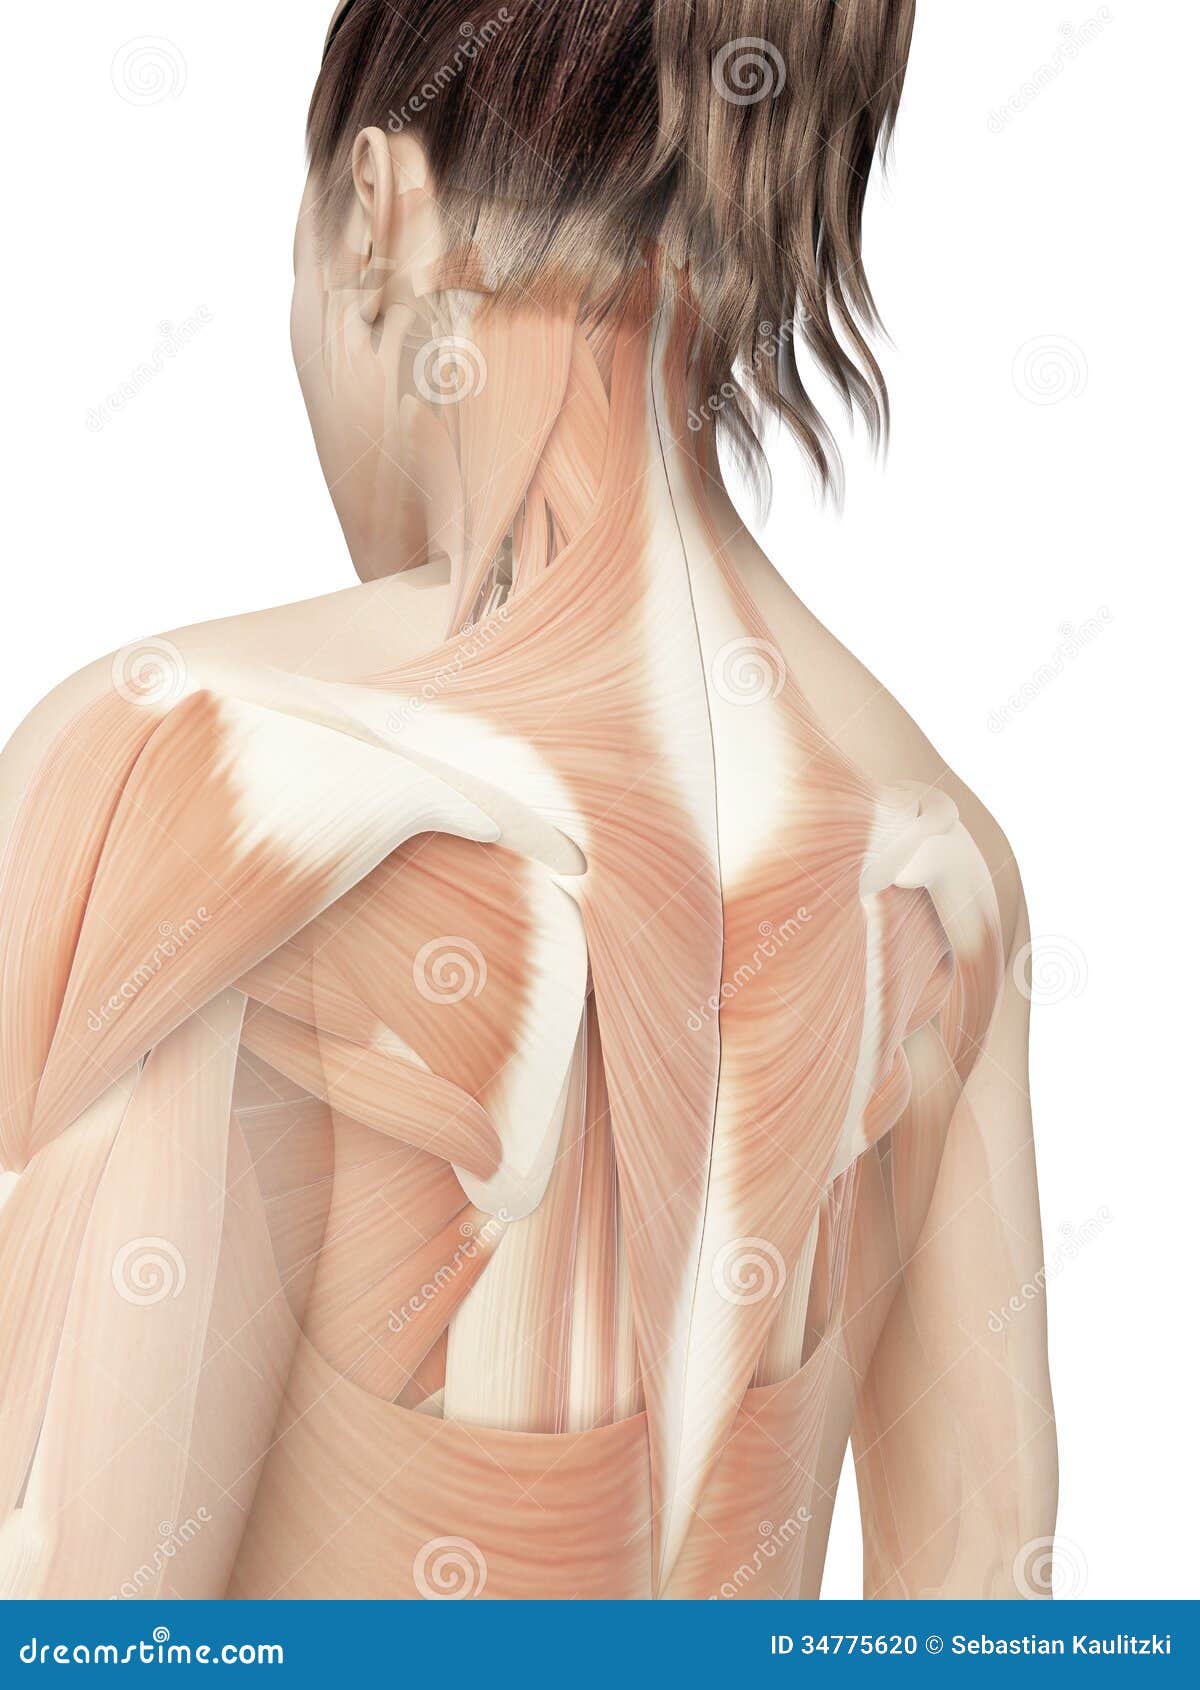 Female back muscles stock illustration. Illustration of woman - 34775620